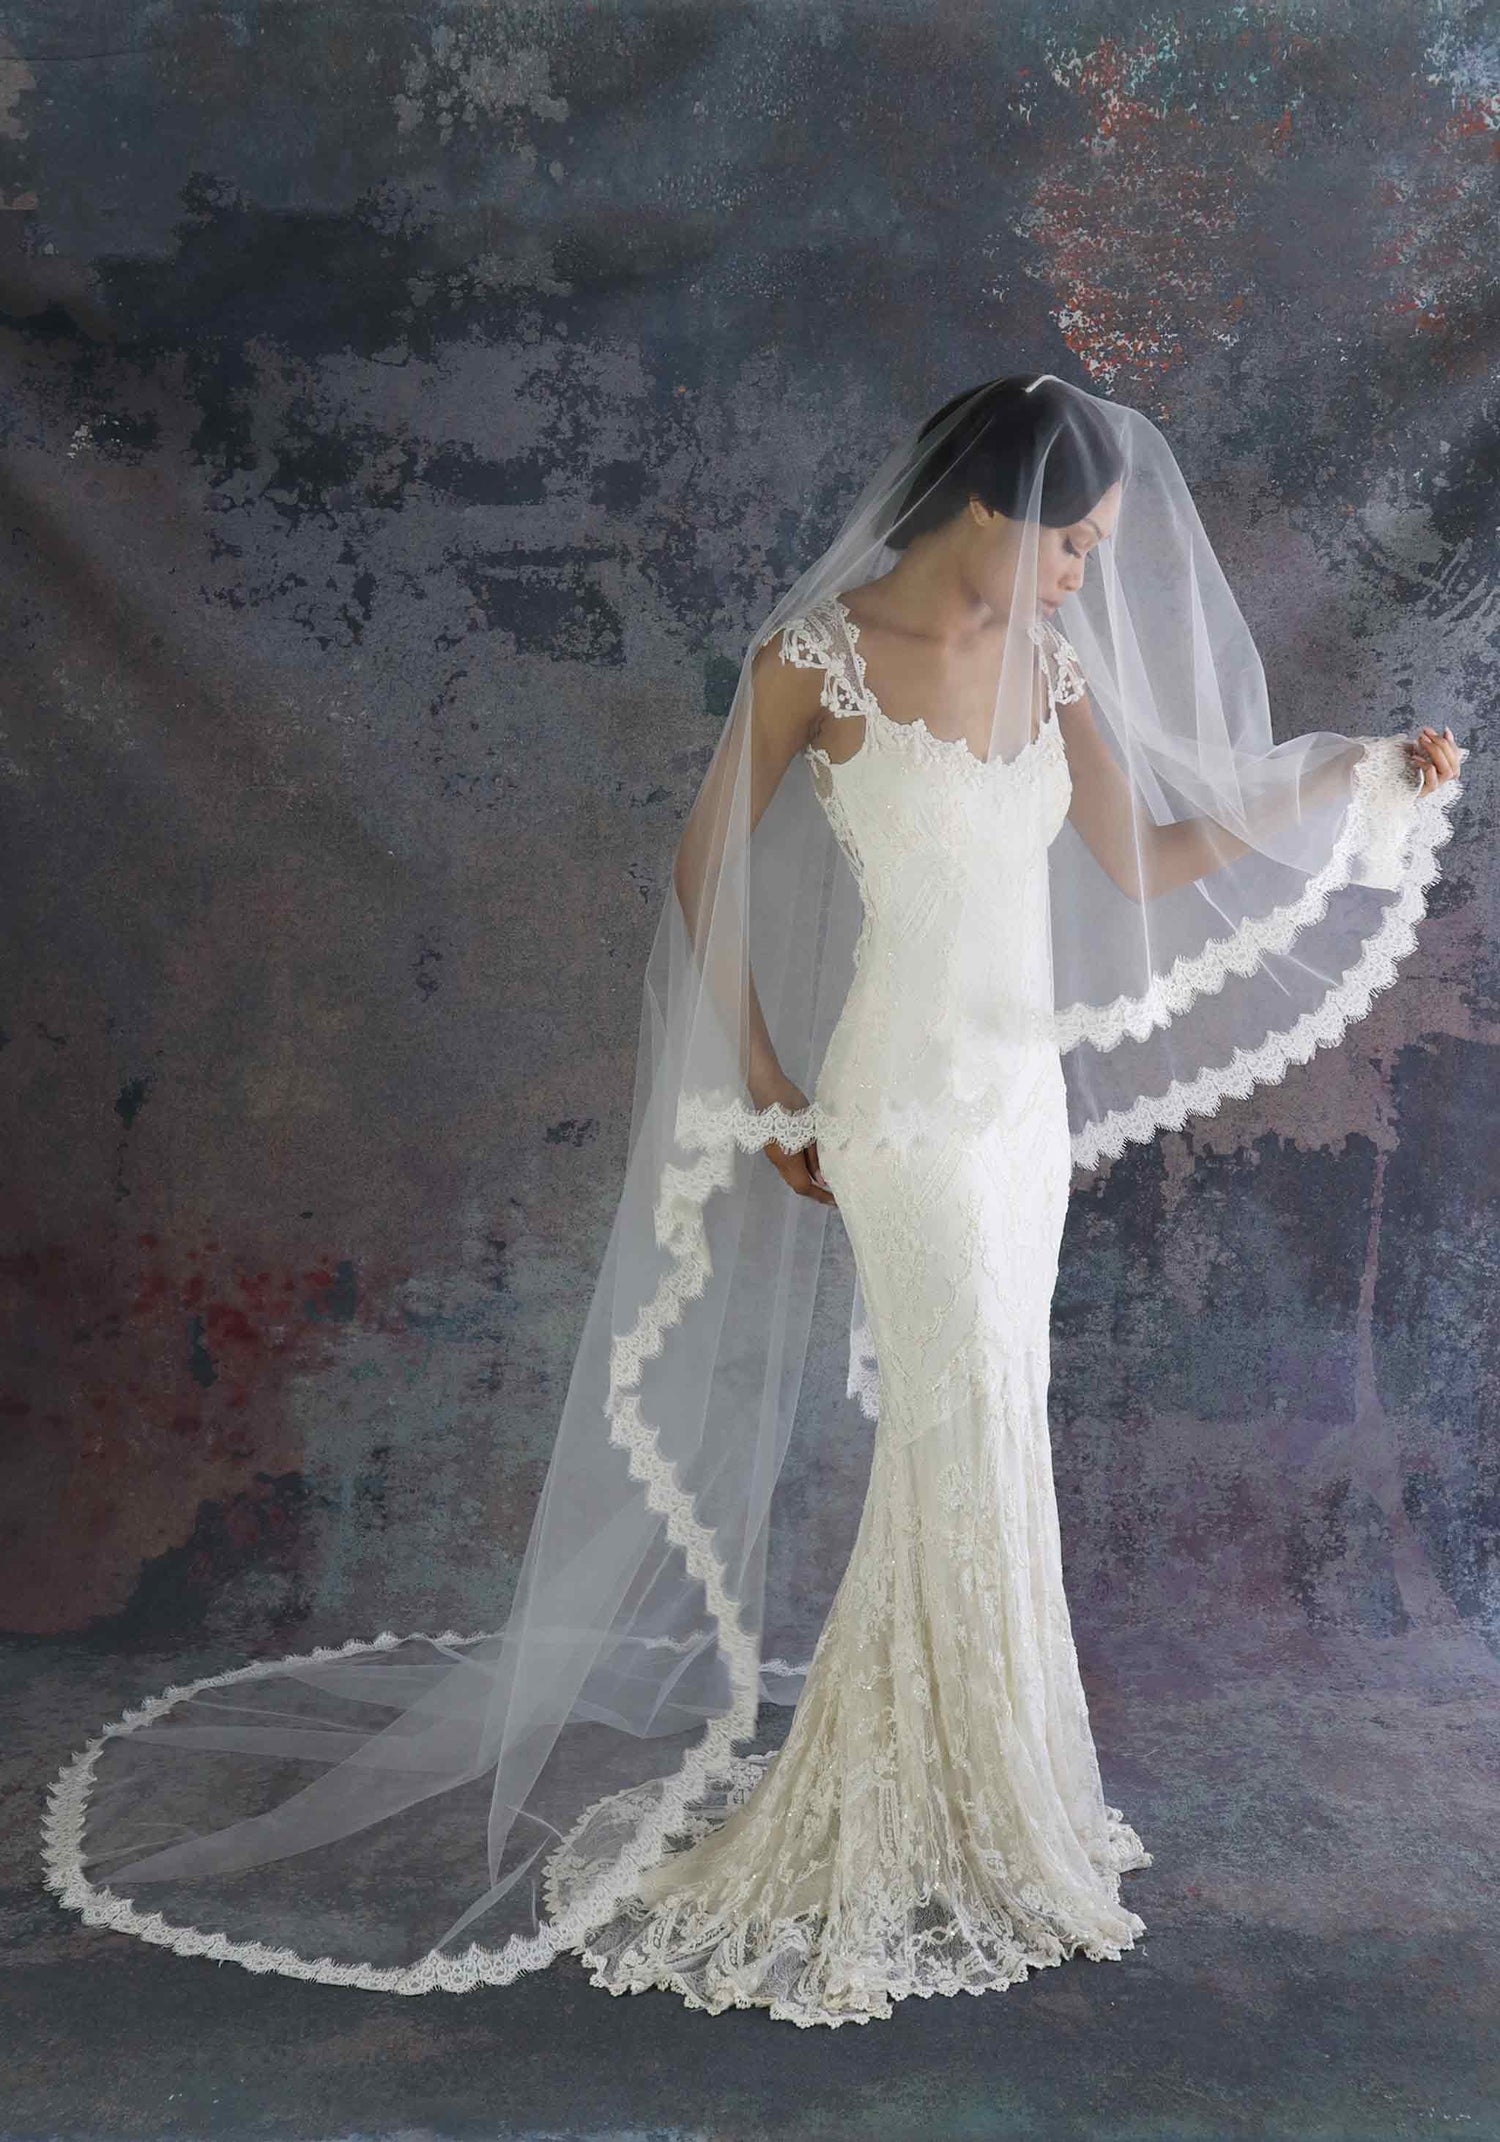 Lace wedding veil